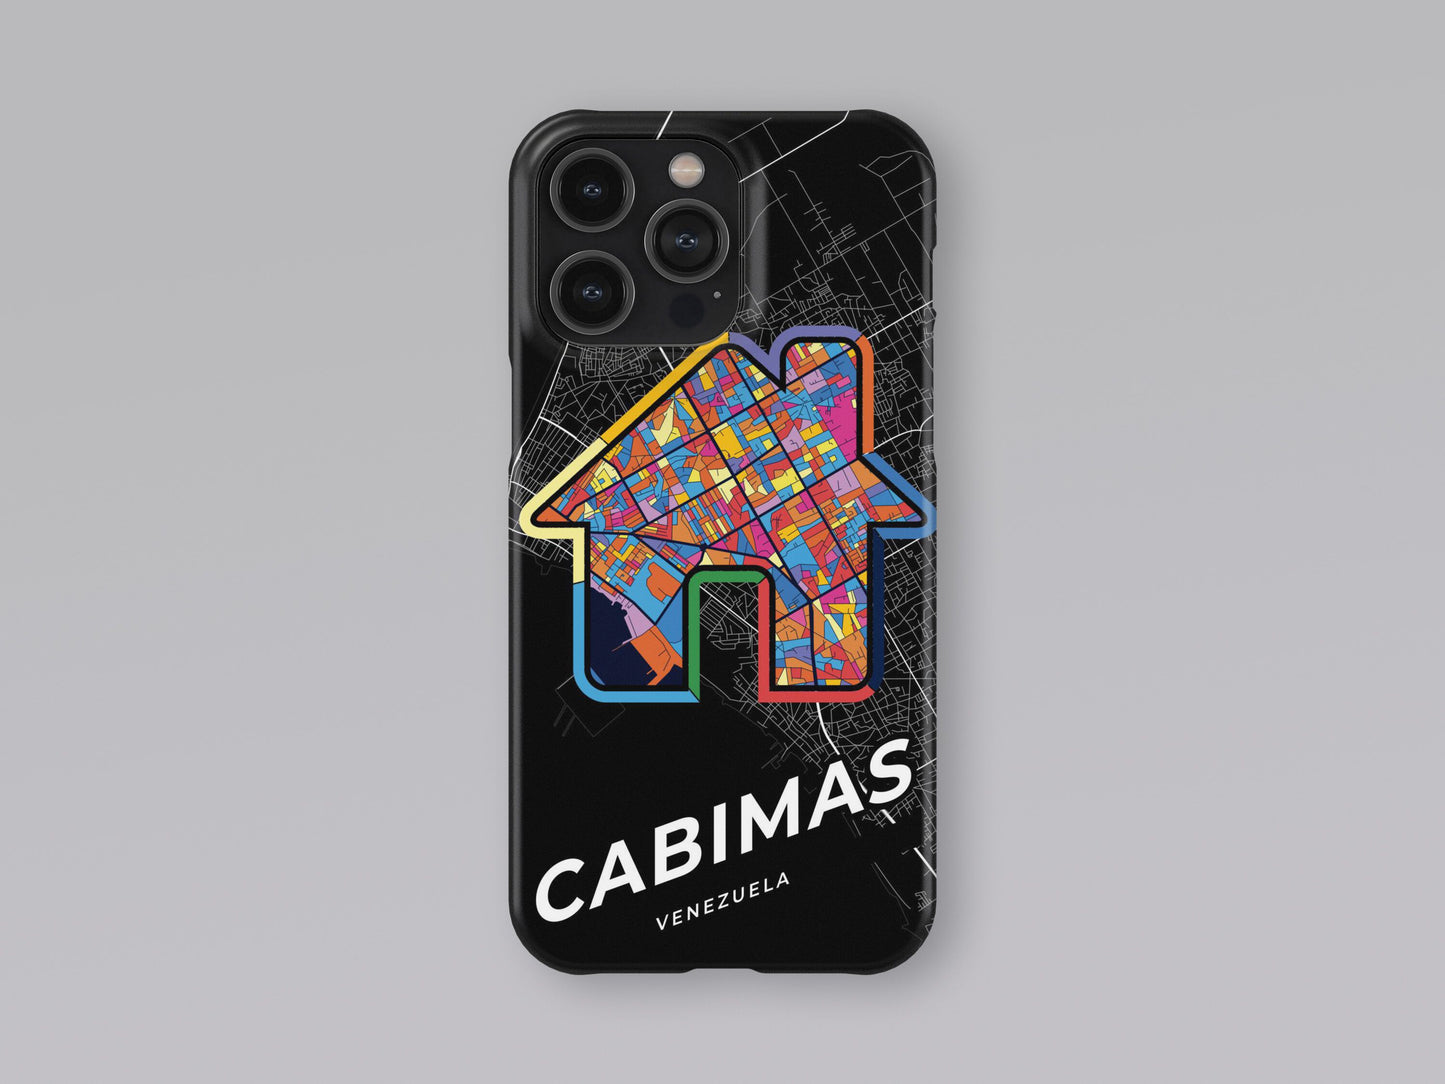 Cabimas Venezuela slim phone case with colorful icon. Birthday, wedding or housewarming gift. Couple match cases. 3